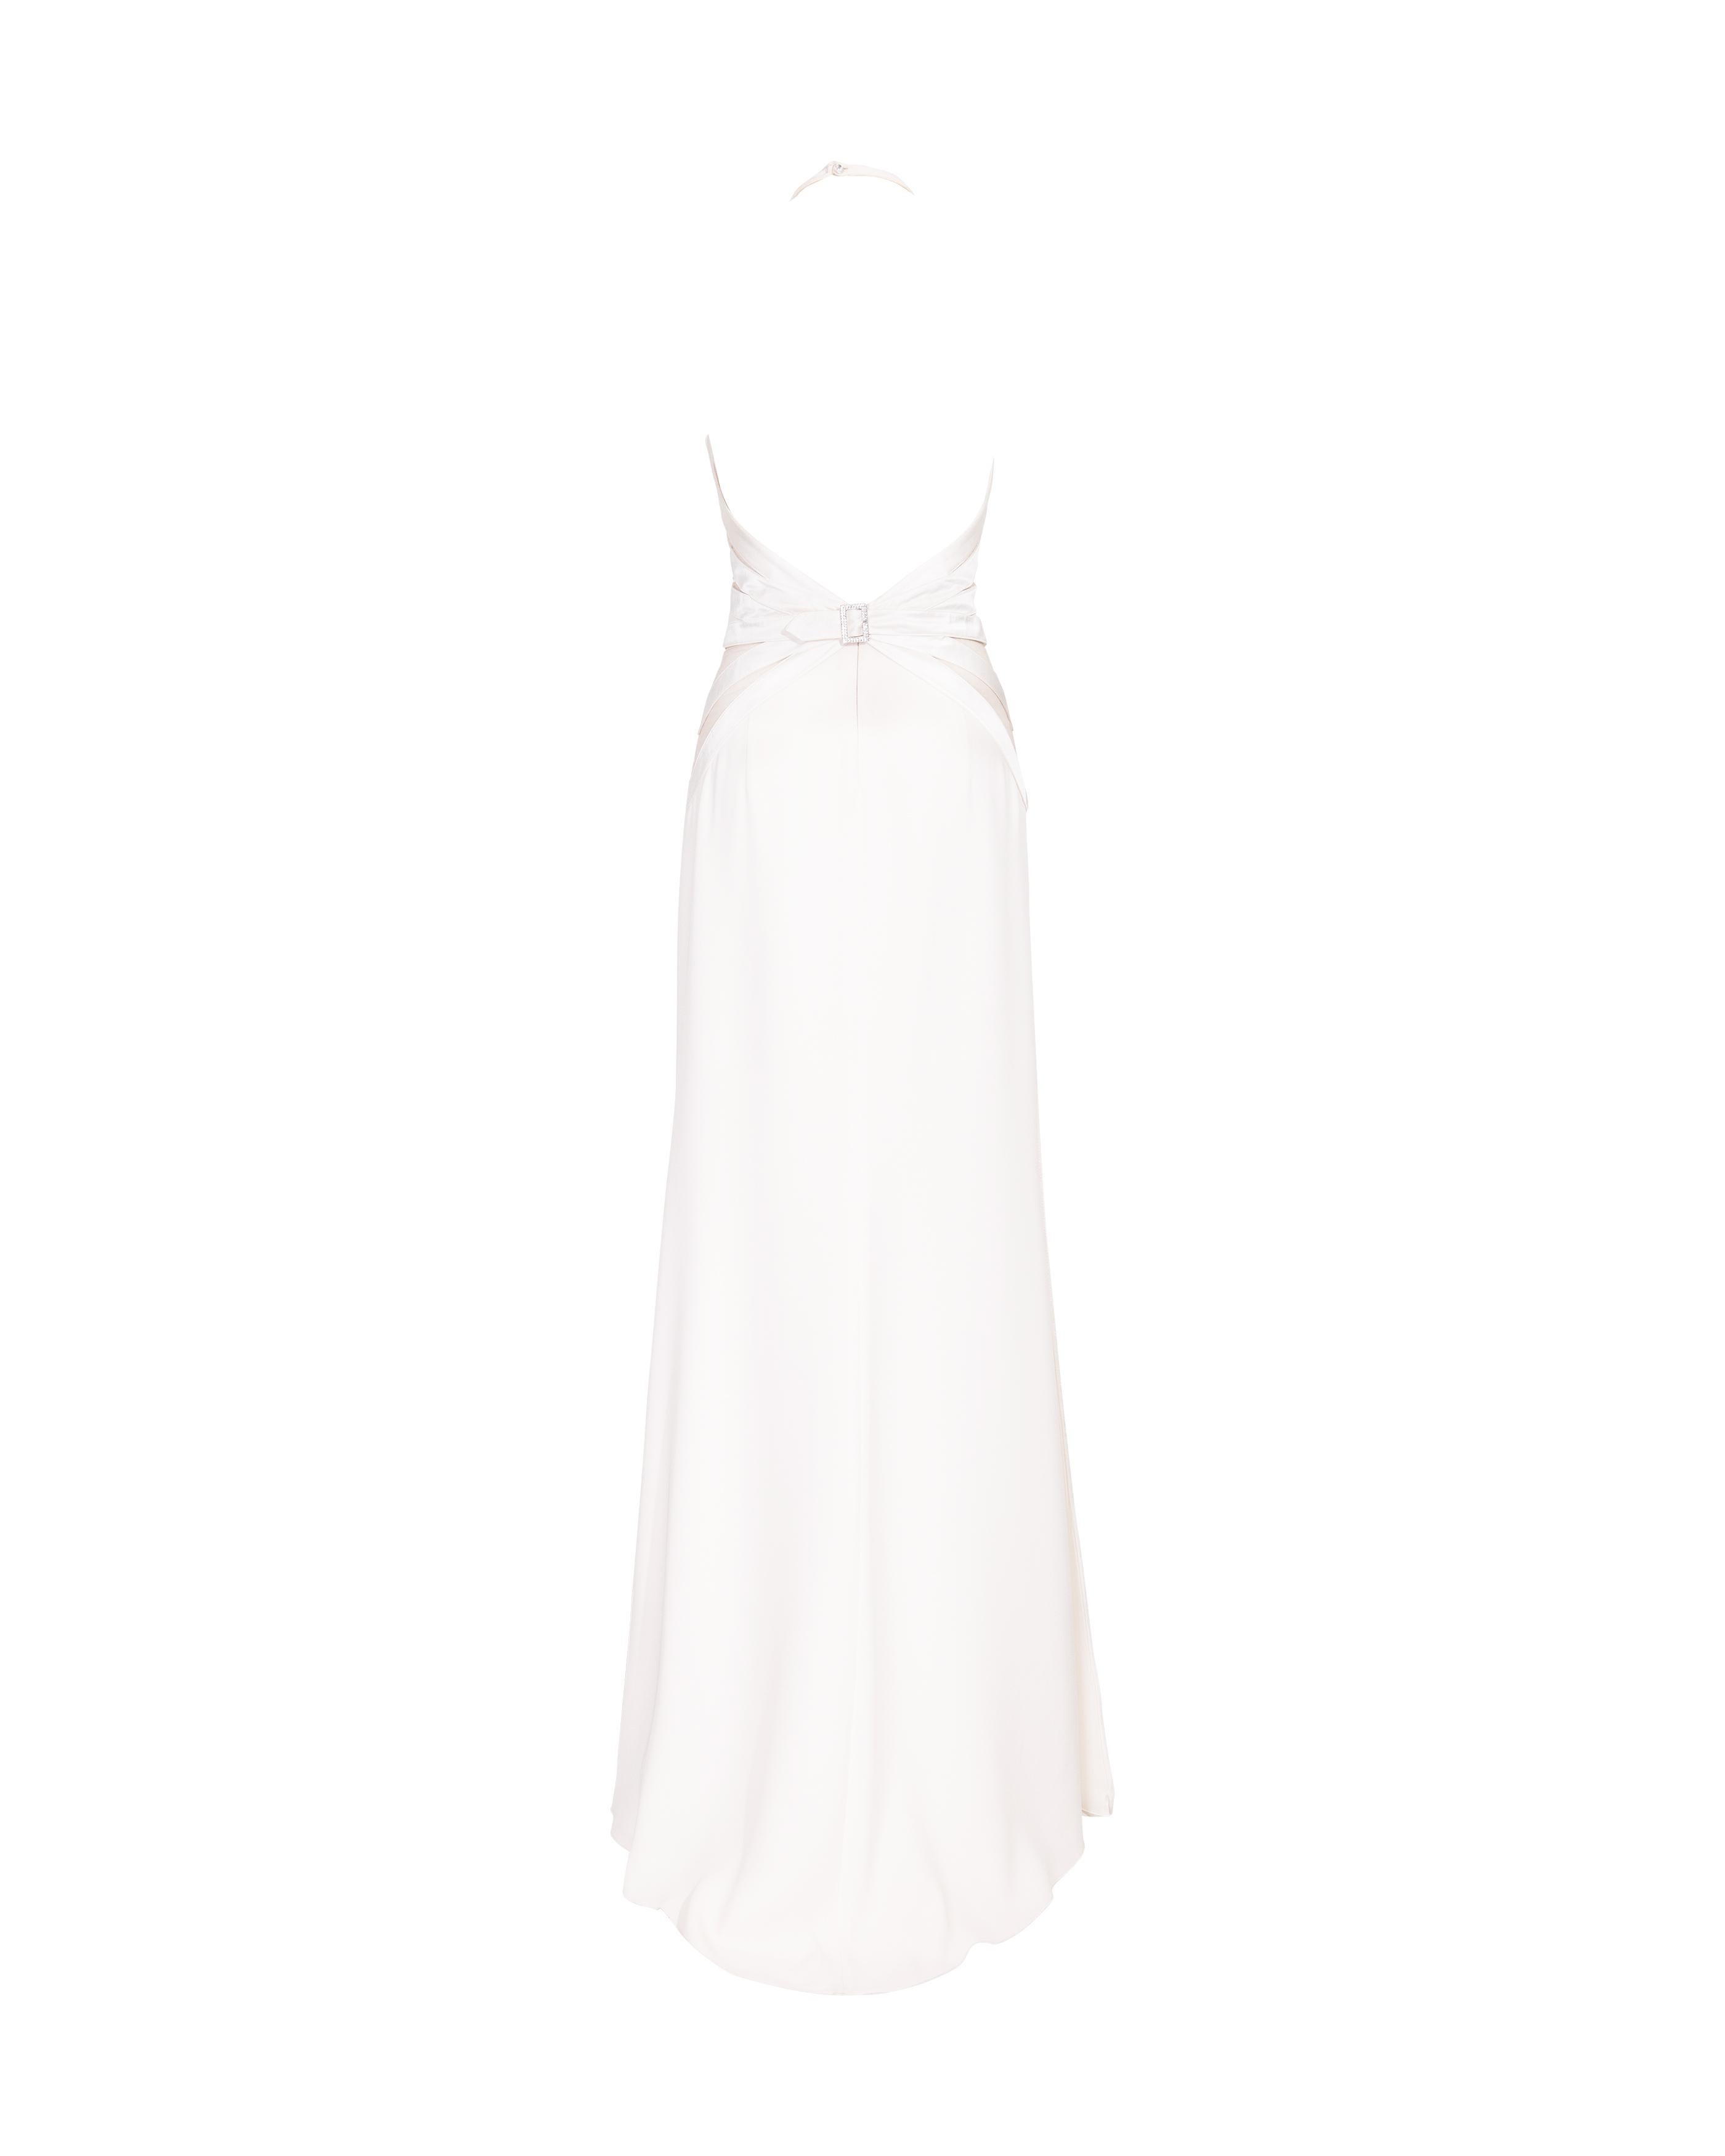 2000's Valentino White Gown with Rhinestone Bondage Details 2